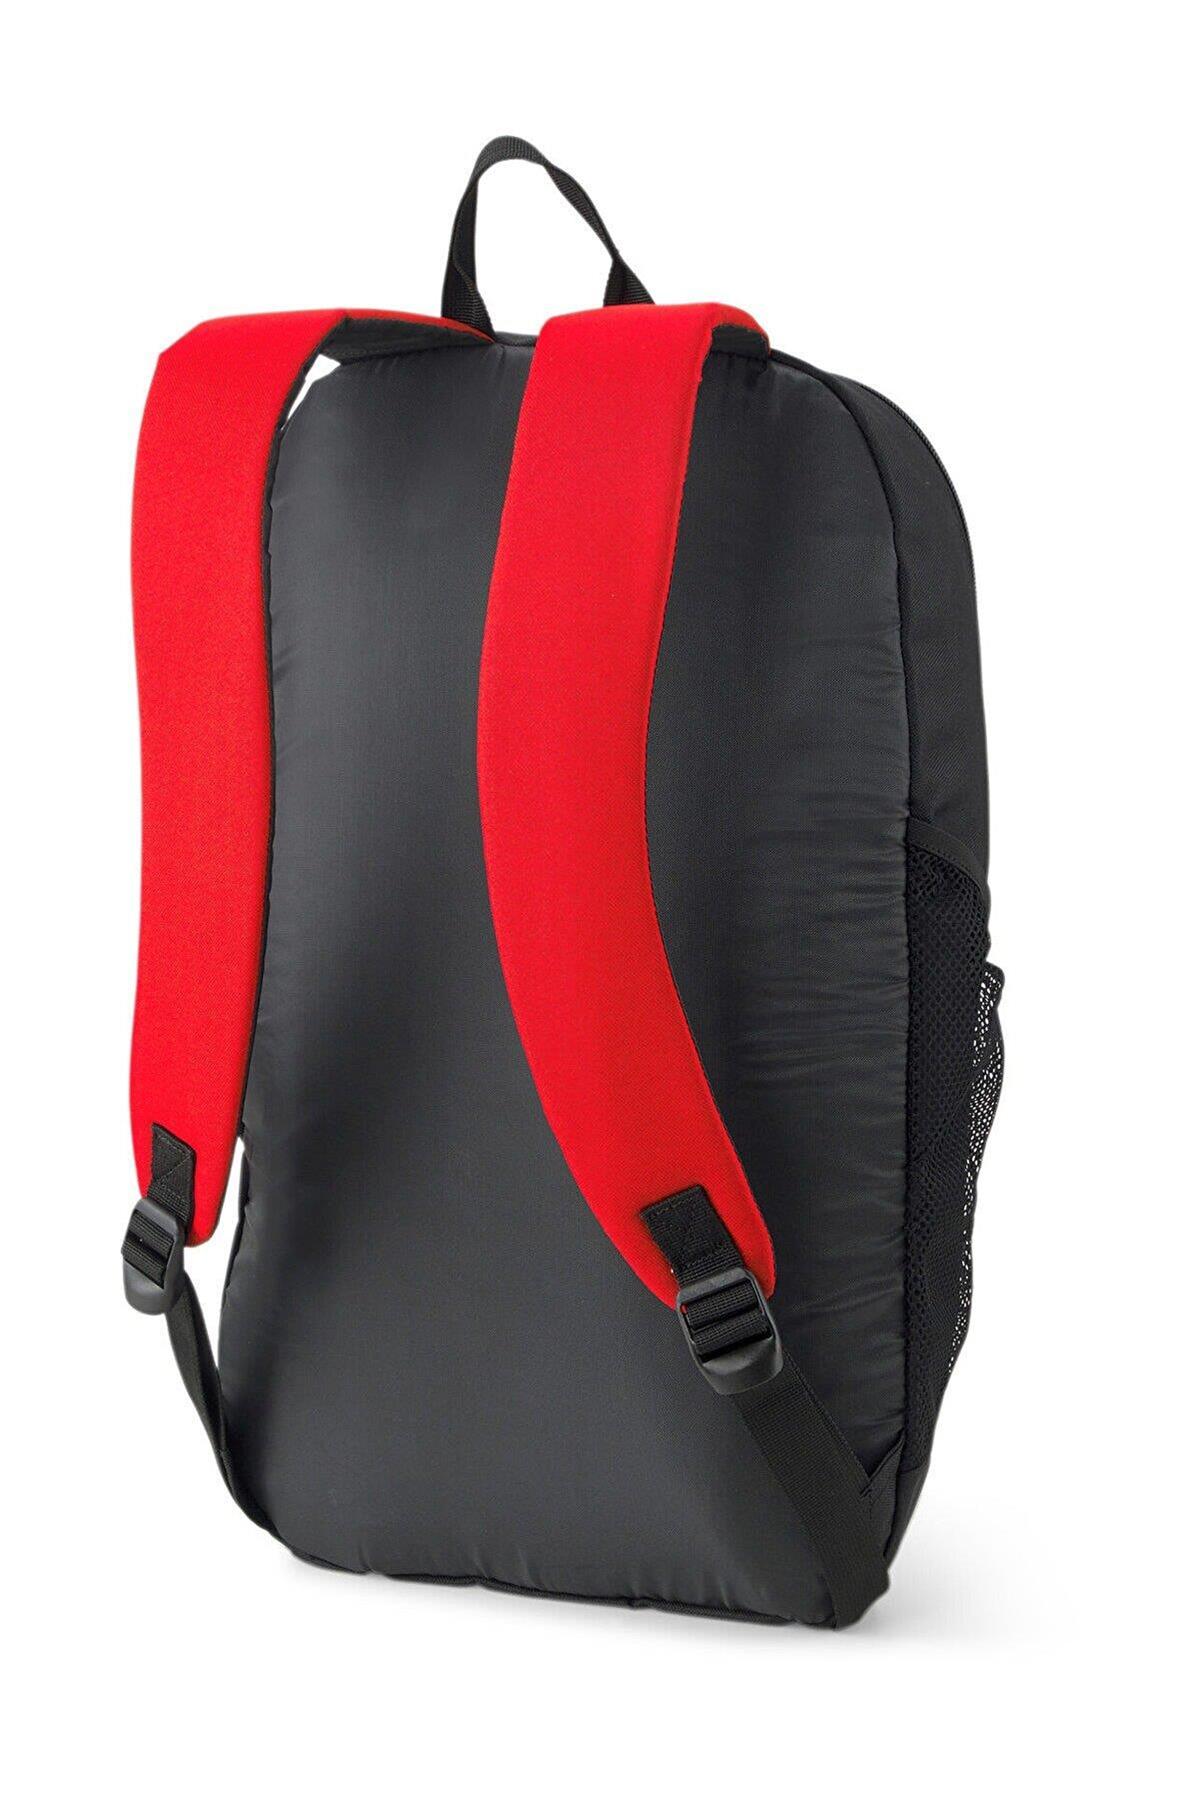 Puma S Backpack 079322 Kırmızı-Siyah Sırt Çantası - Ayakmod